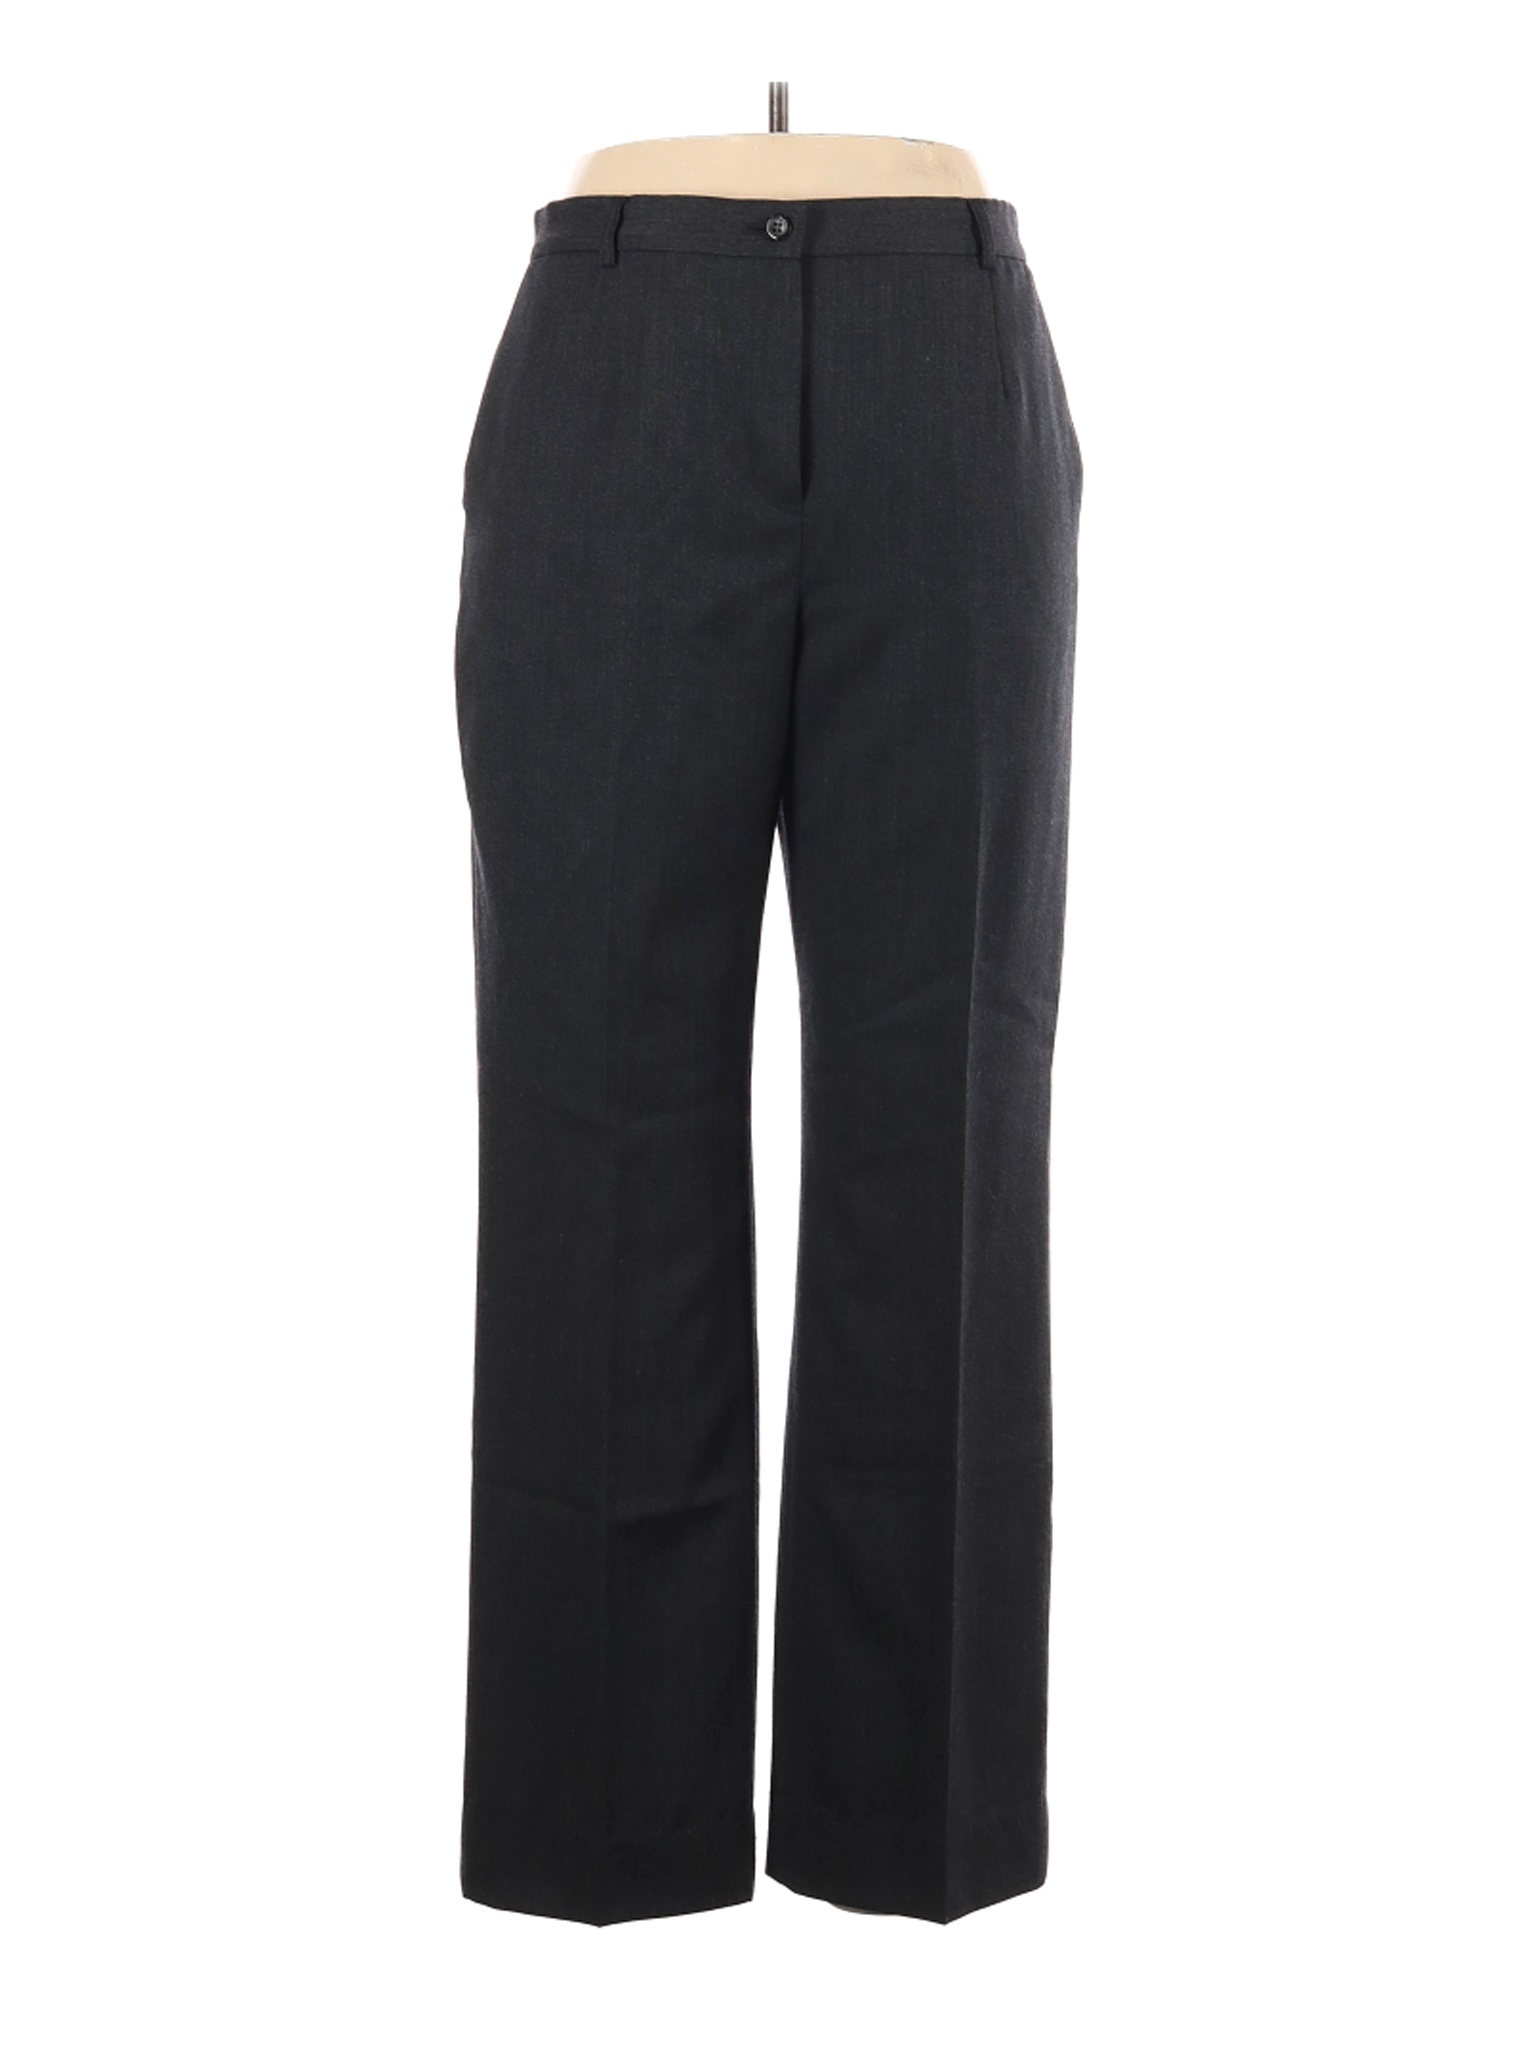 Pendleton Women Black Wool Pants 14 | eBay